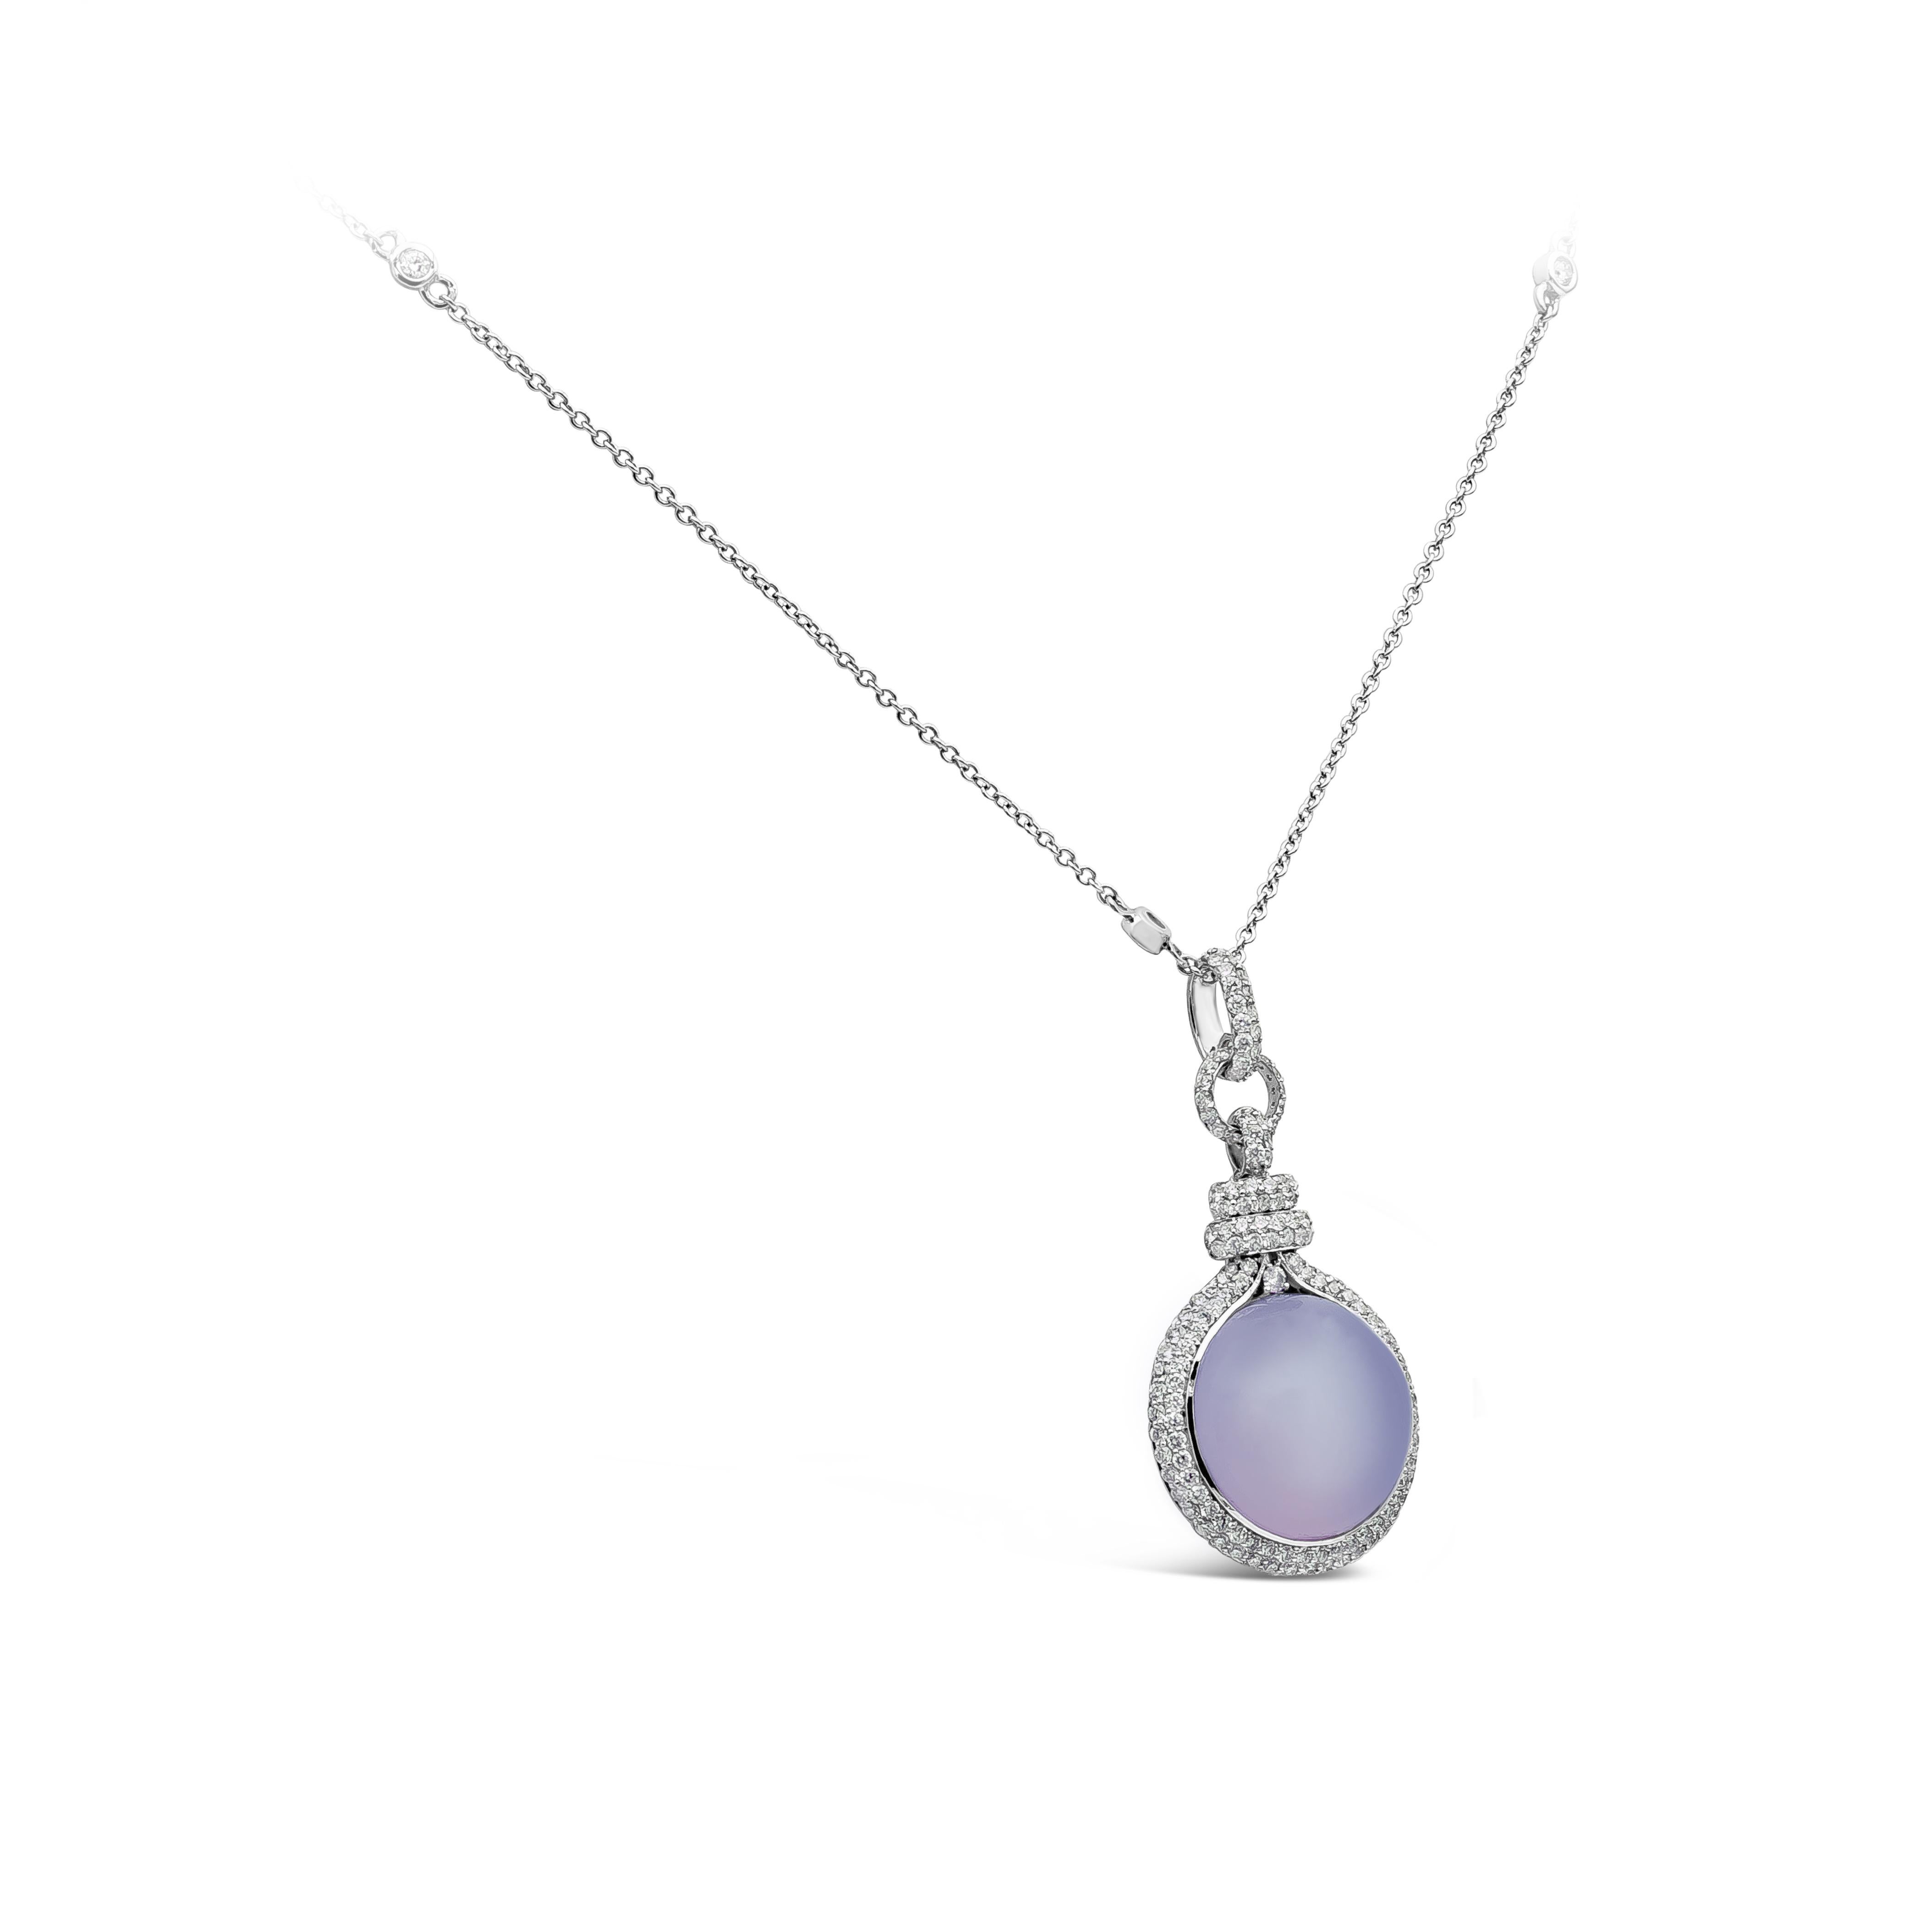 Contemporary Roman Malakov 12.09 Carat Lavender Chalcedony and Diamond Pendant Necklace For Sale